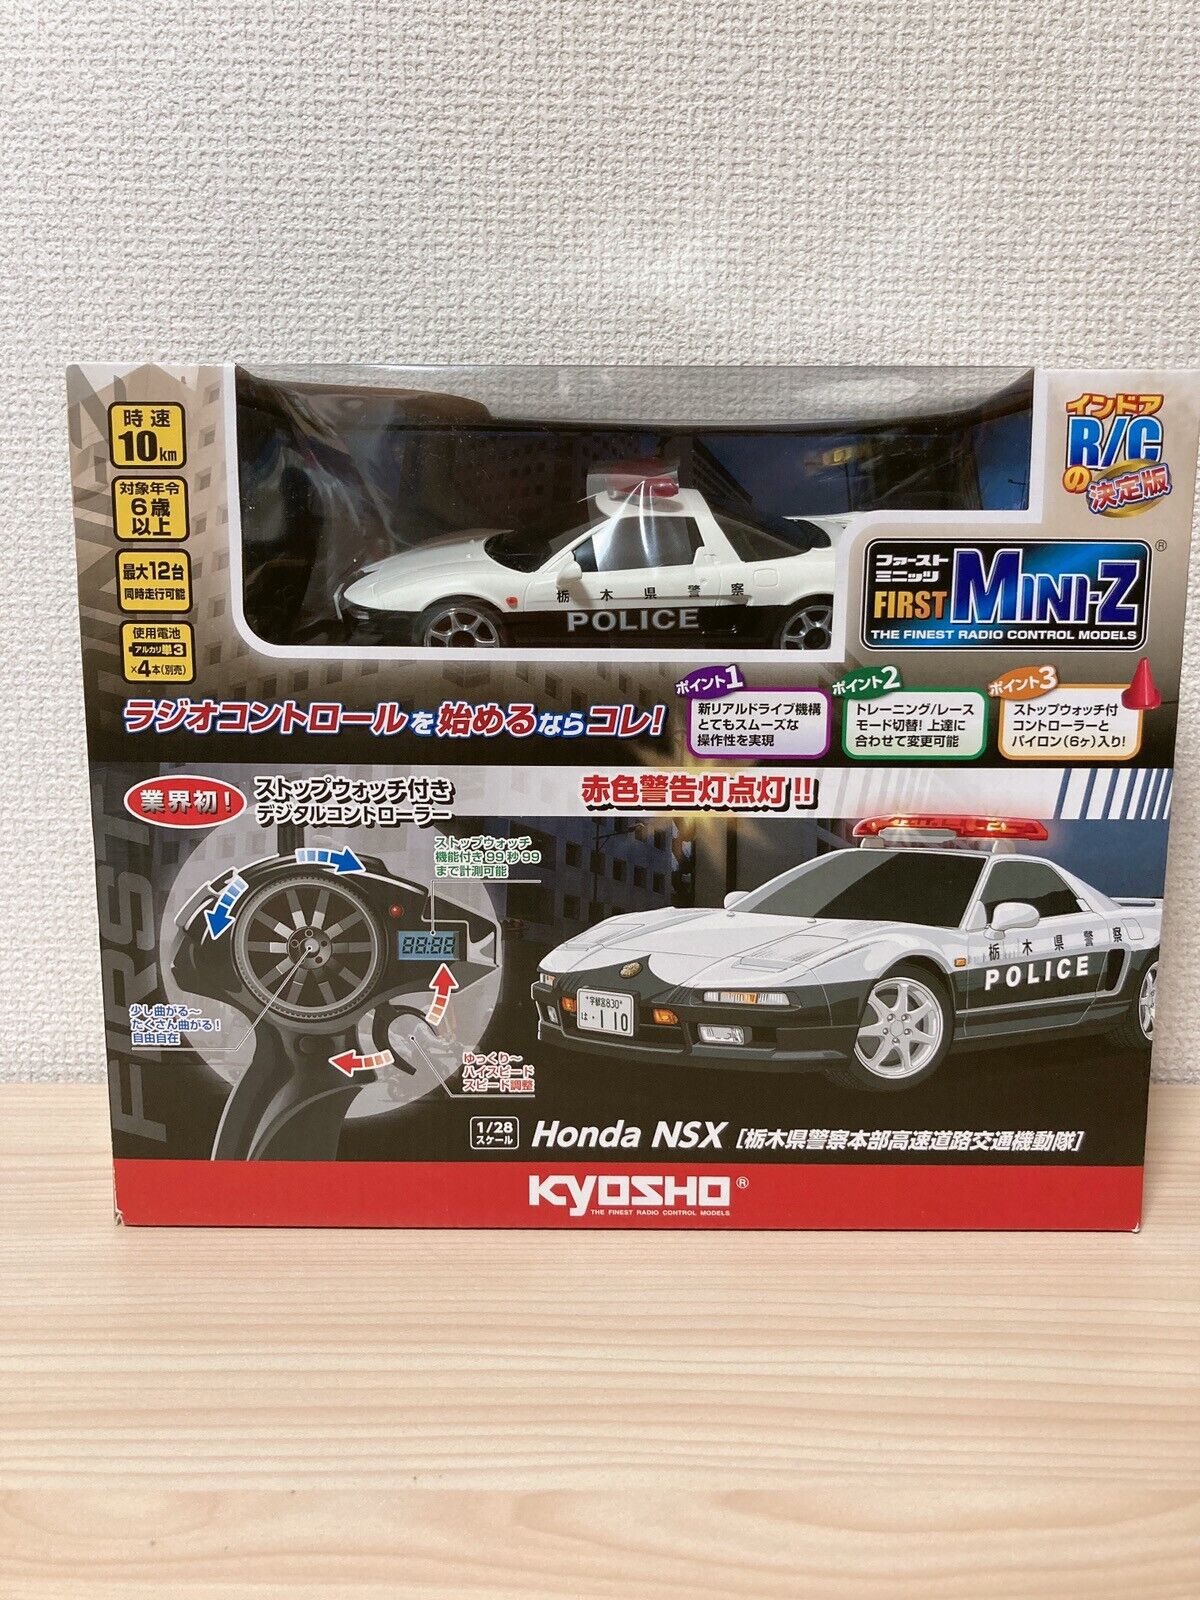 Kyosho Egg RC First MINI-Z Honda NSX Japan POLICE Car RTR Ready to Run 1/28